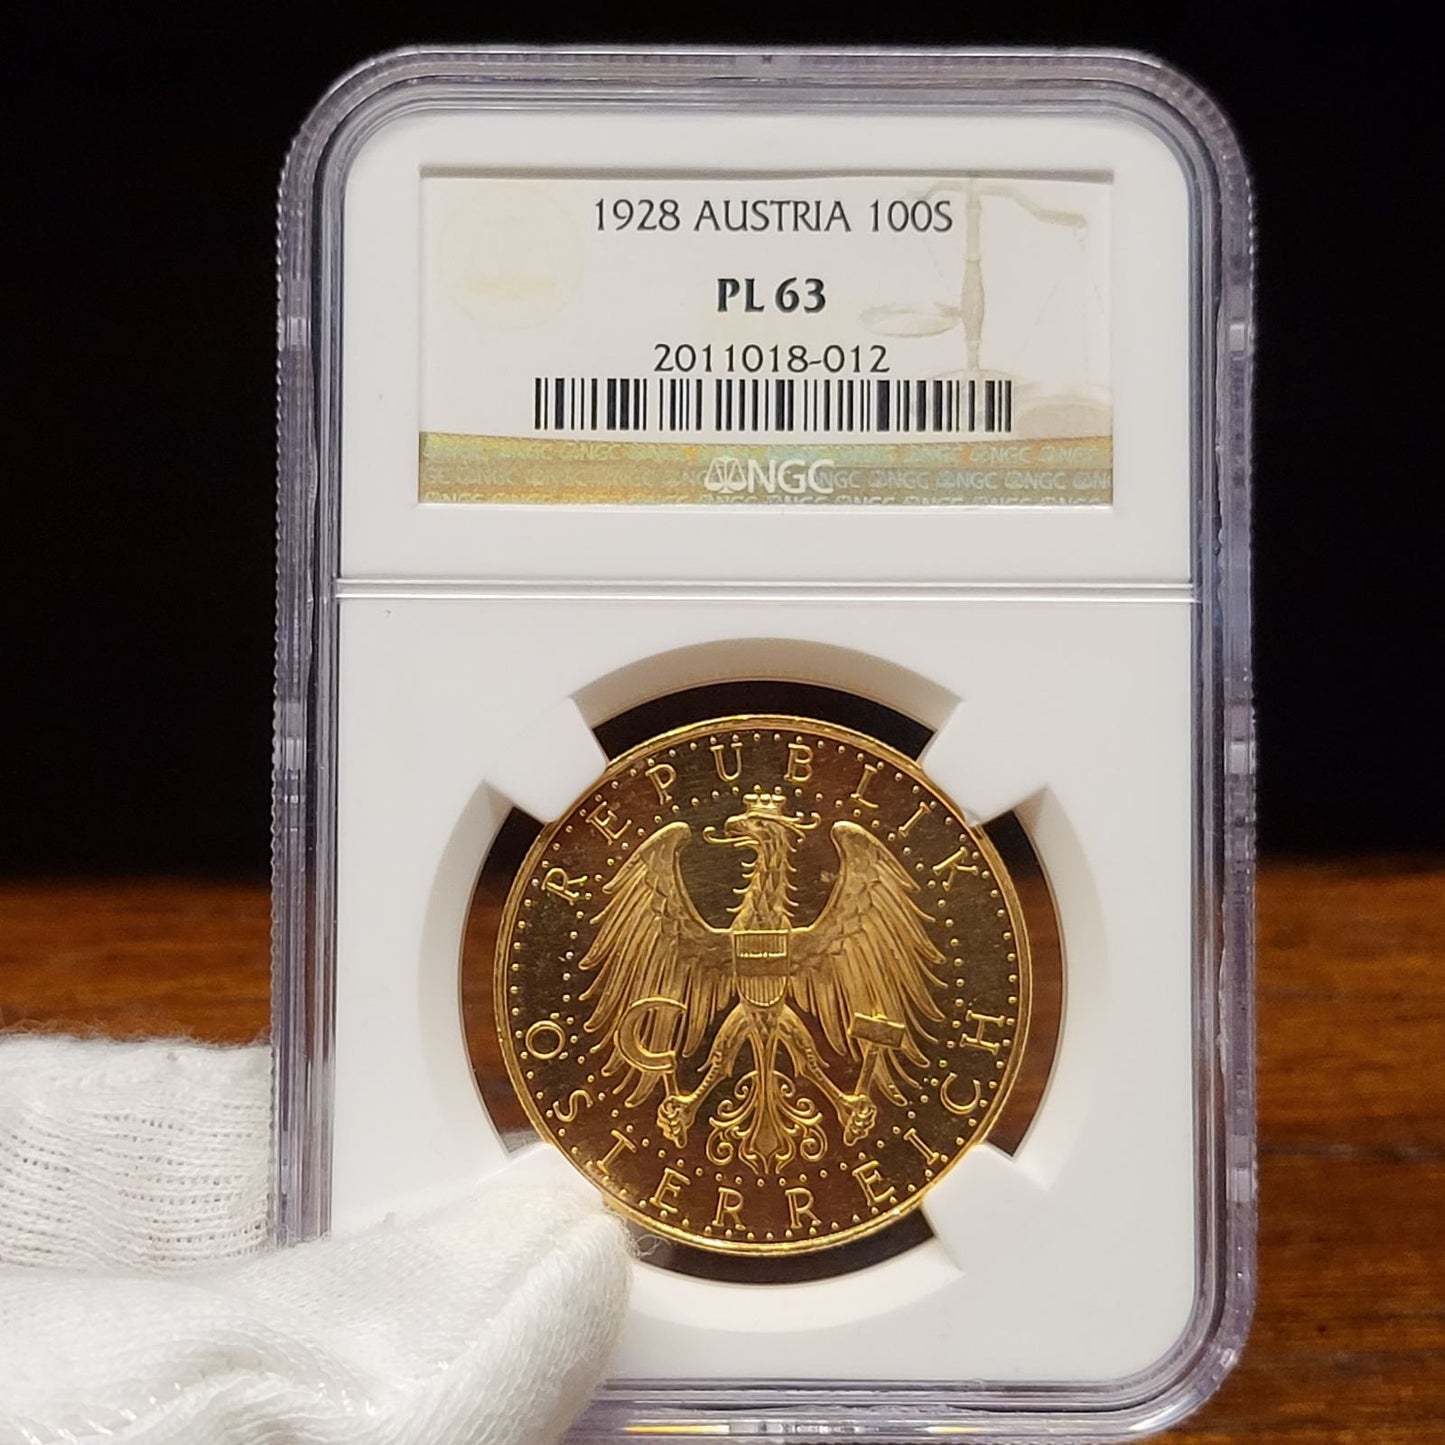 Austria Republic gold Prooflike 100 Schilling 1928 PL63 